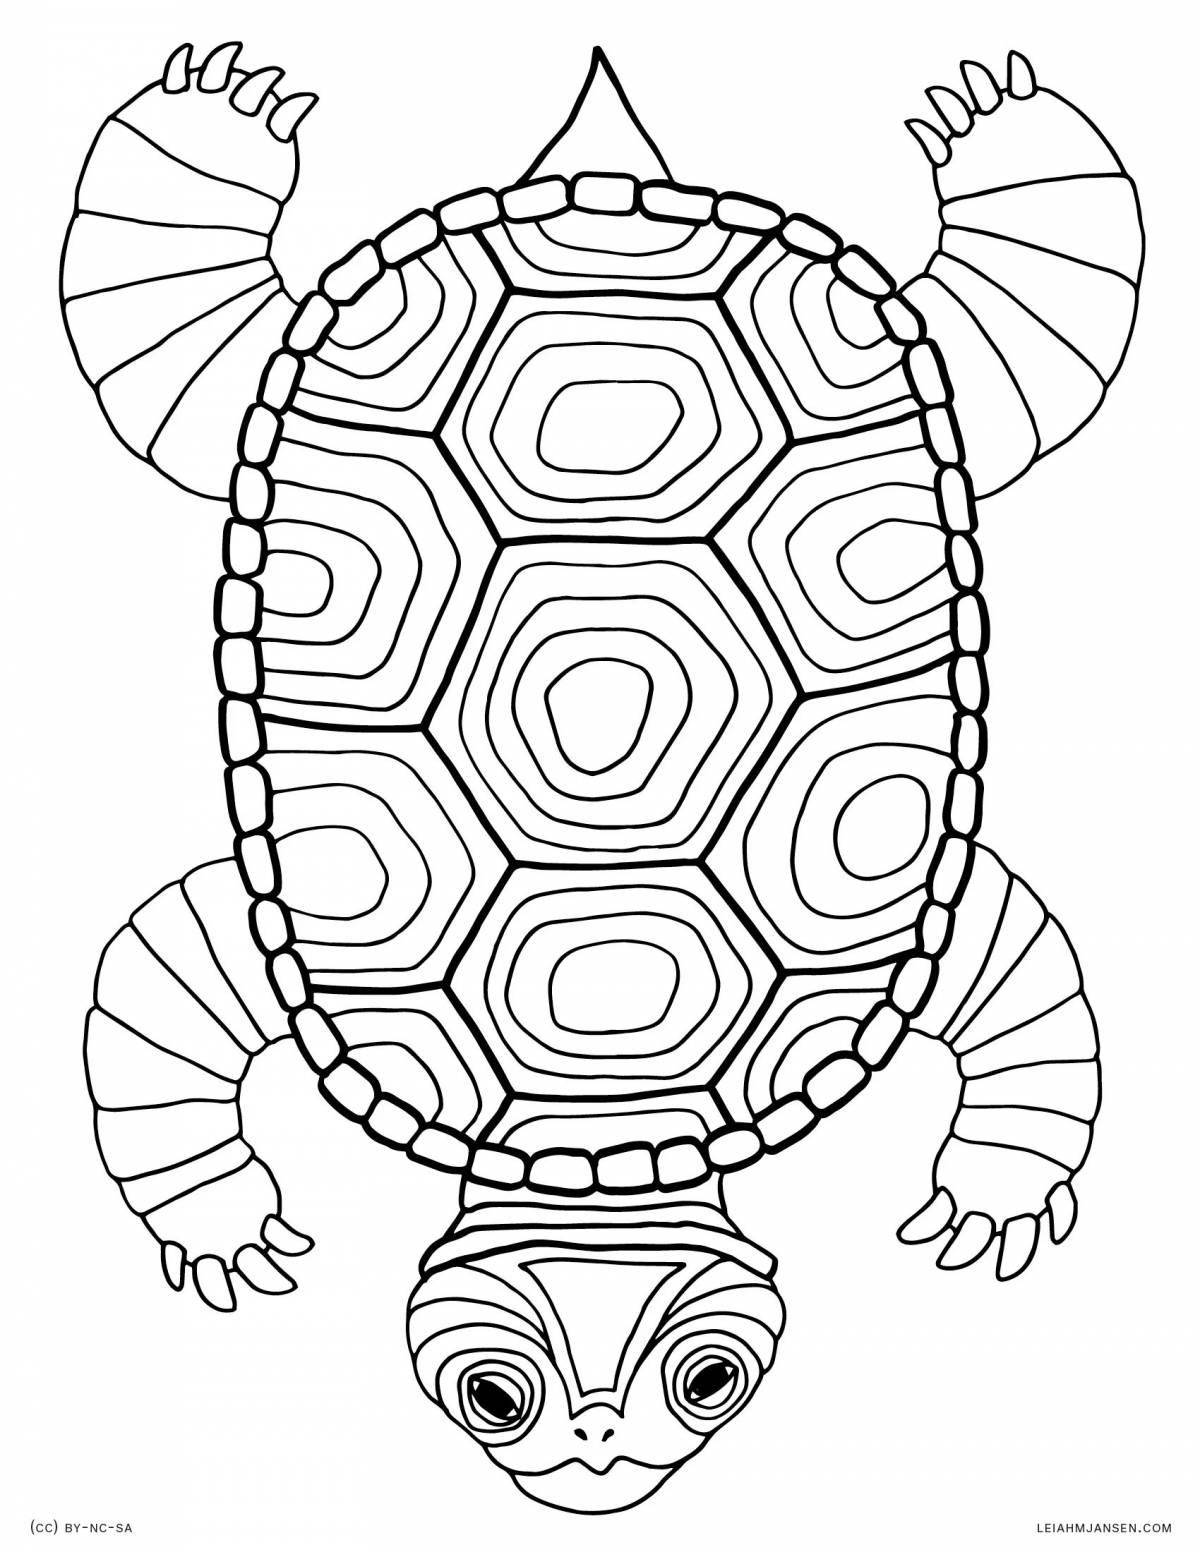 Rich turtle coloring